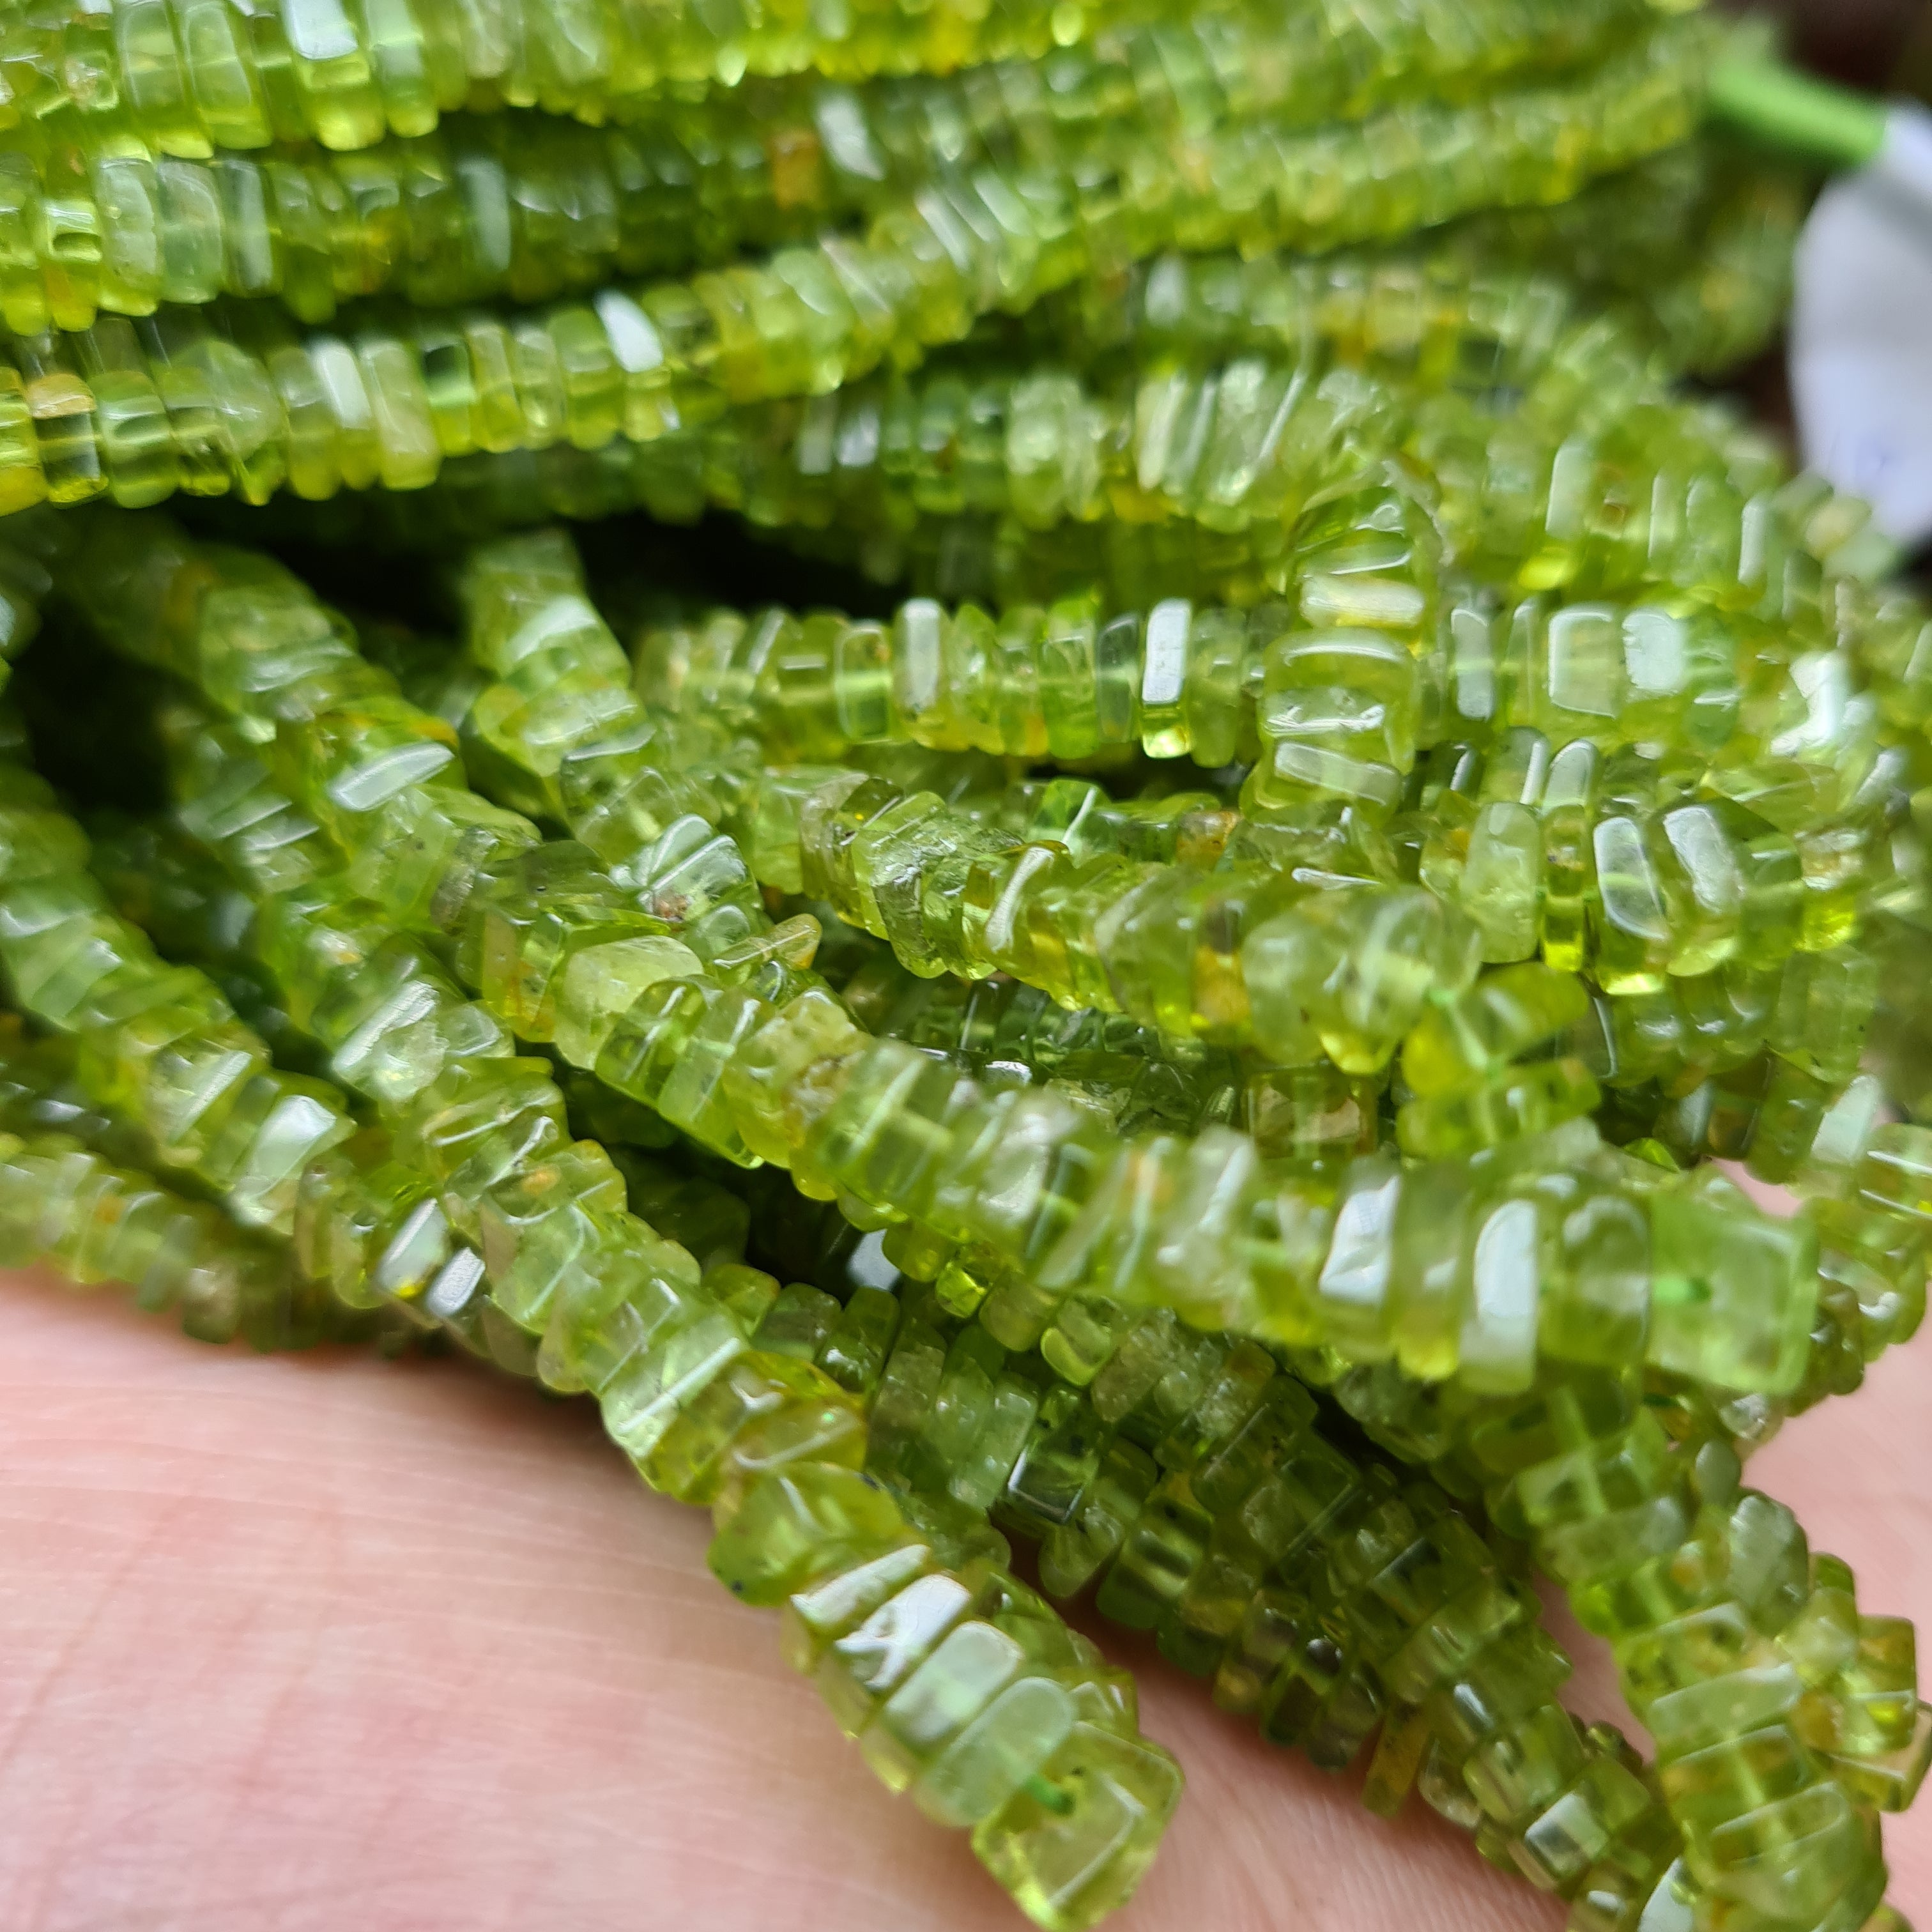 Natural Green Peridot Square Shape Beads Gemstone Size -4-5mm 17 Inches Full Gemstone - The LabradoriteKing